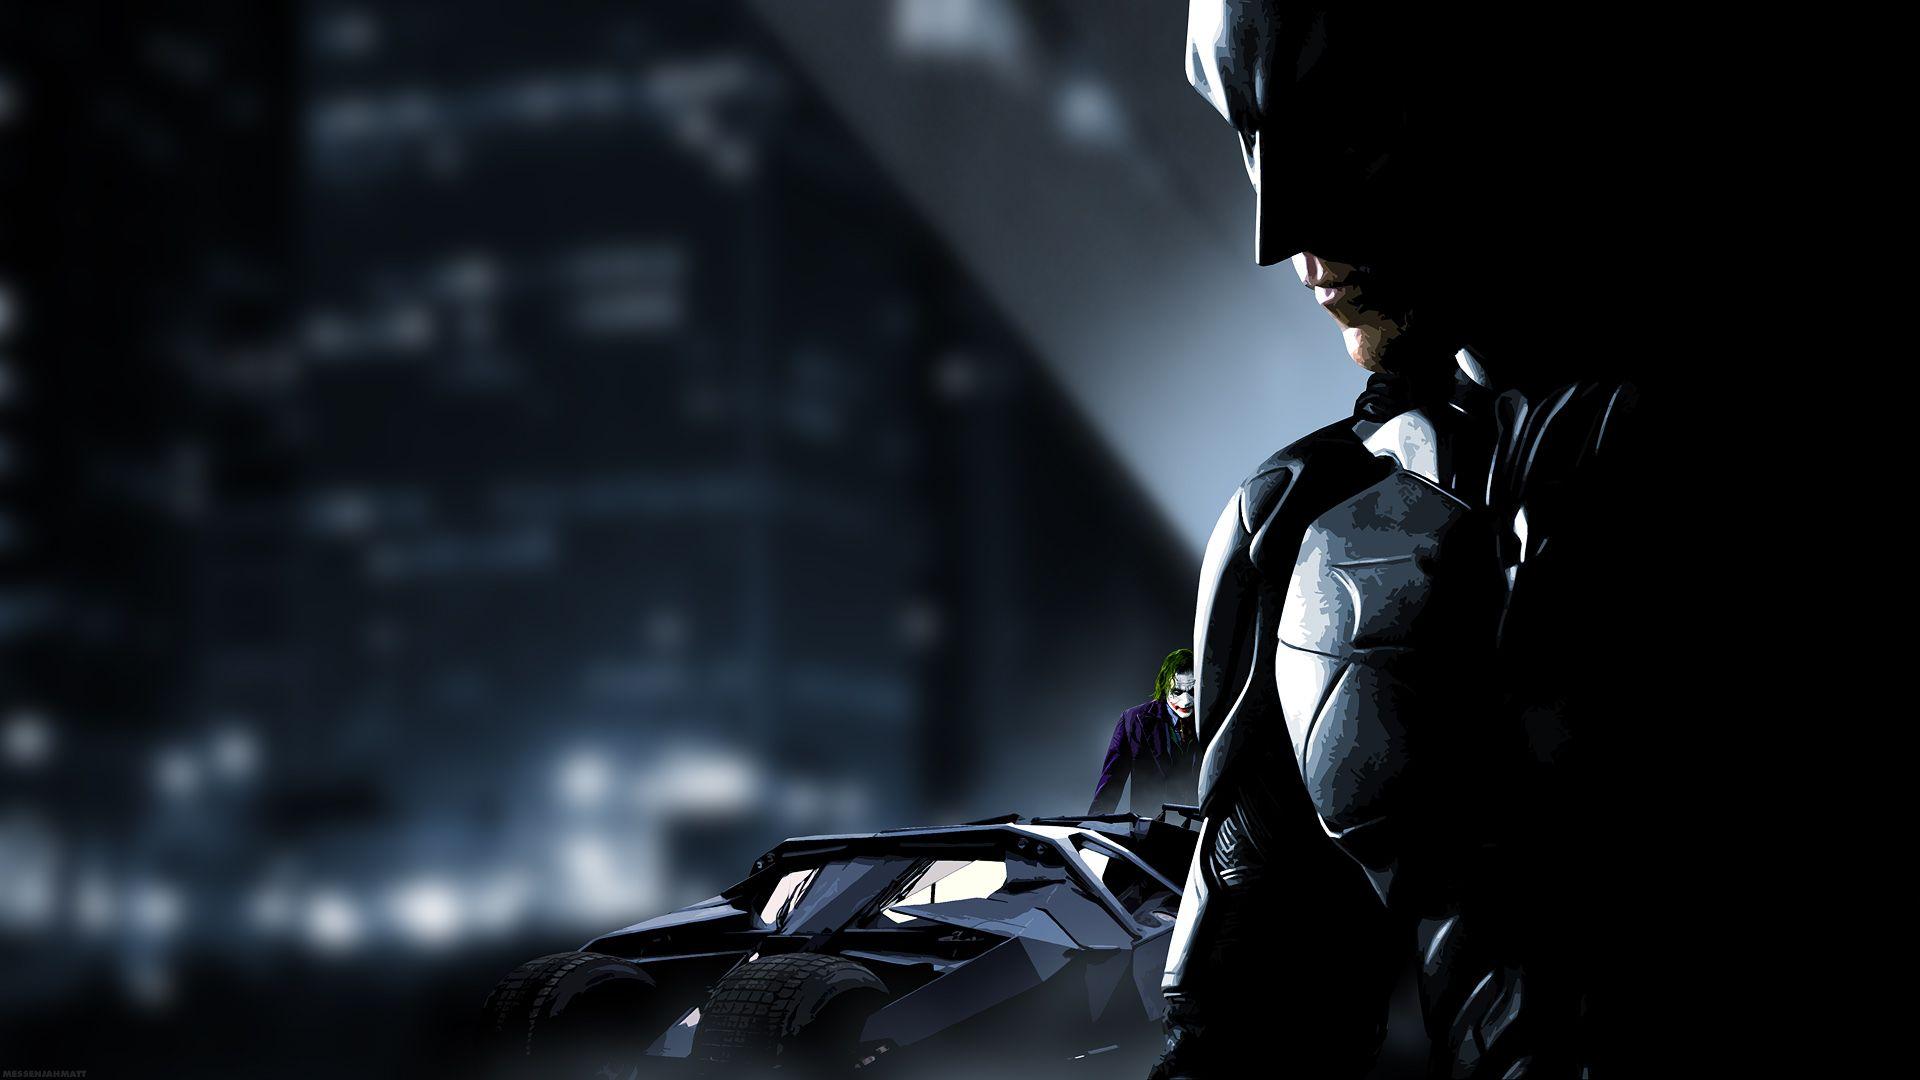 Batman HD Wallpaper Collection For Free Download. HD Wallpaper